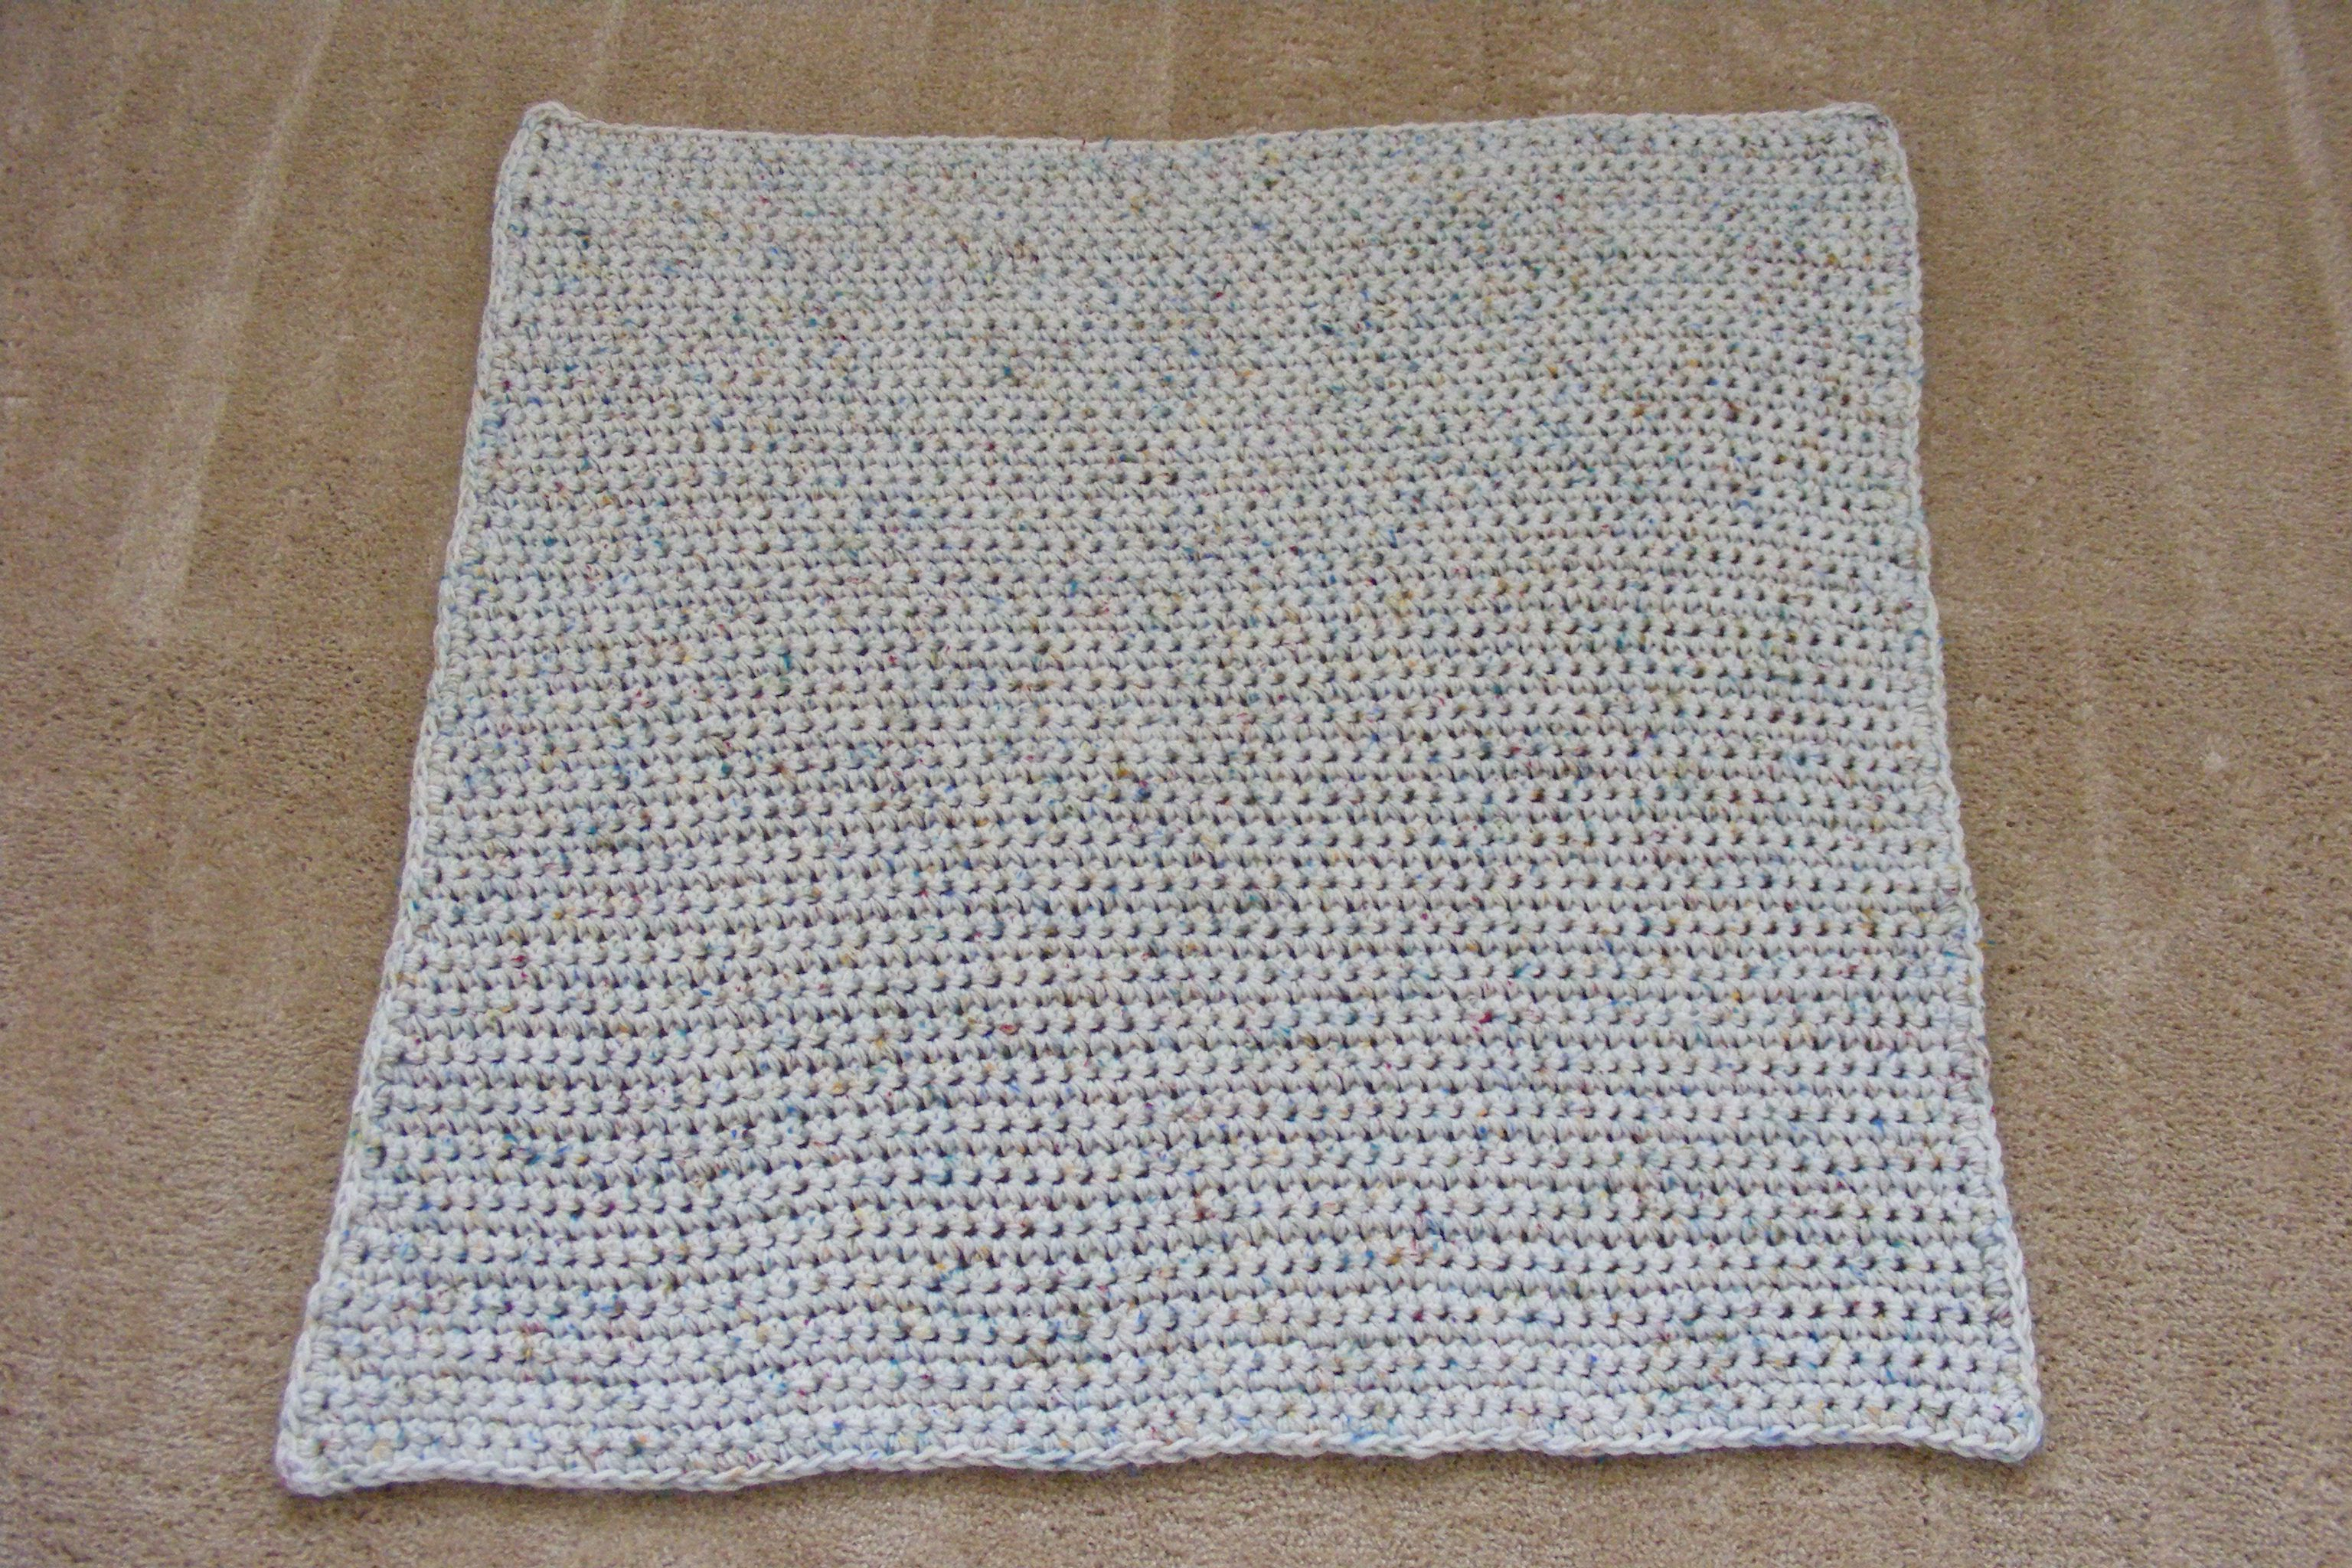 Knitting Baby Blankets Patterns 15 Adorable Crochet Ba Blanket Patterns